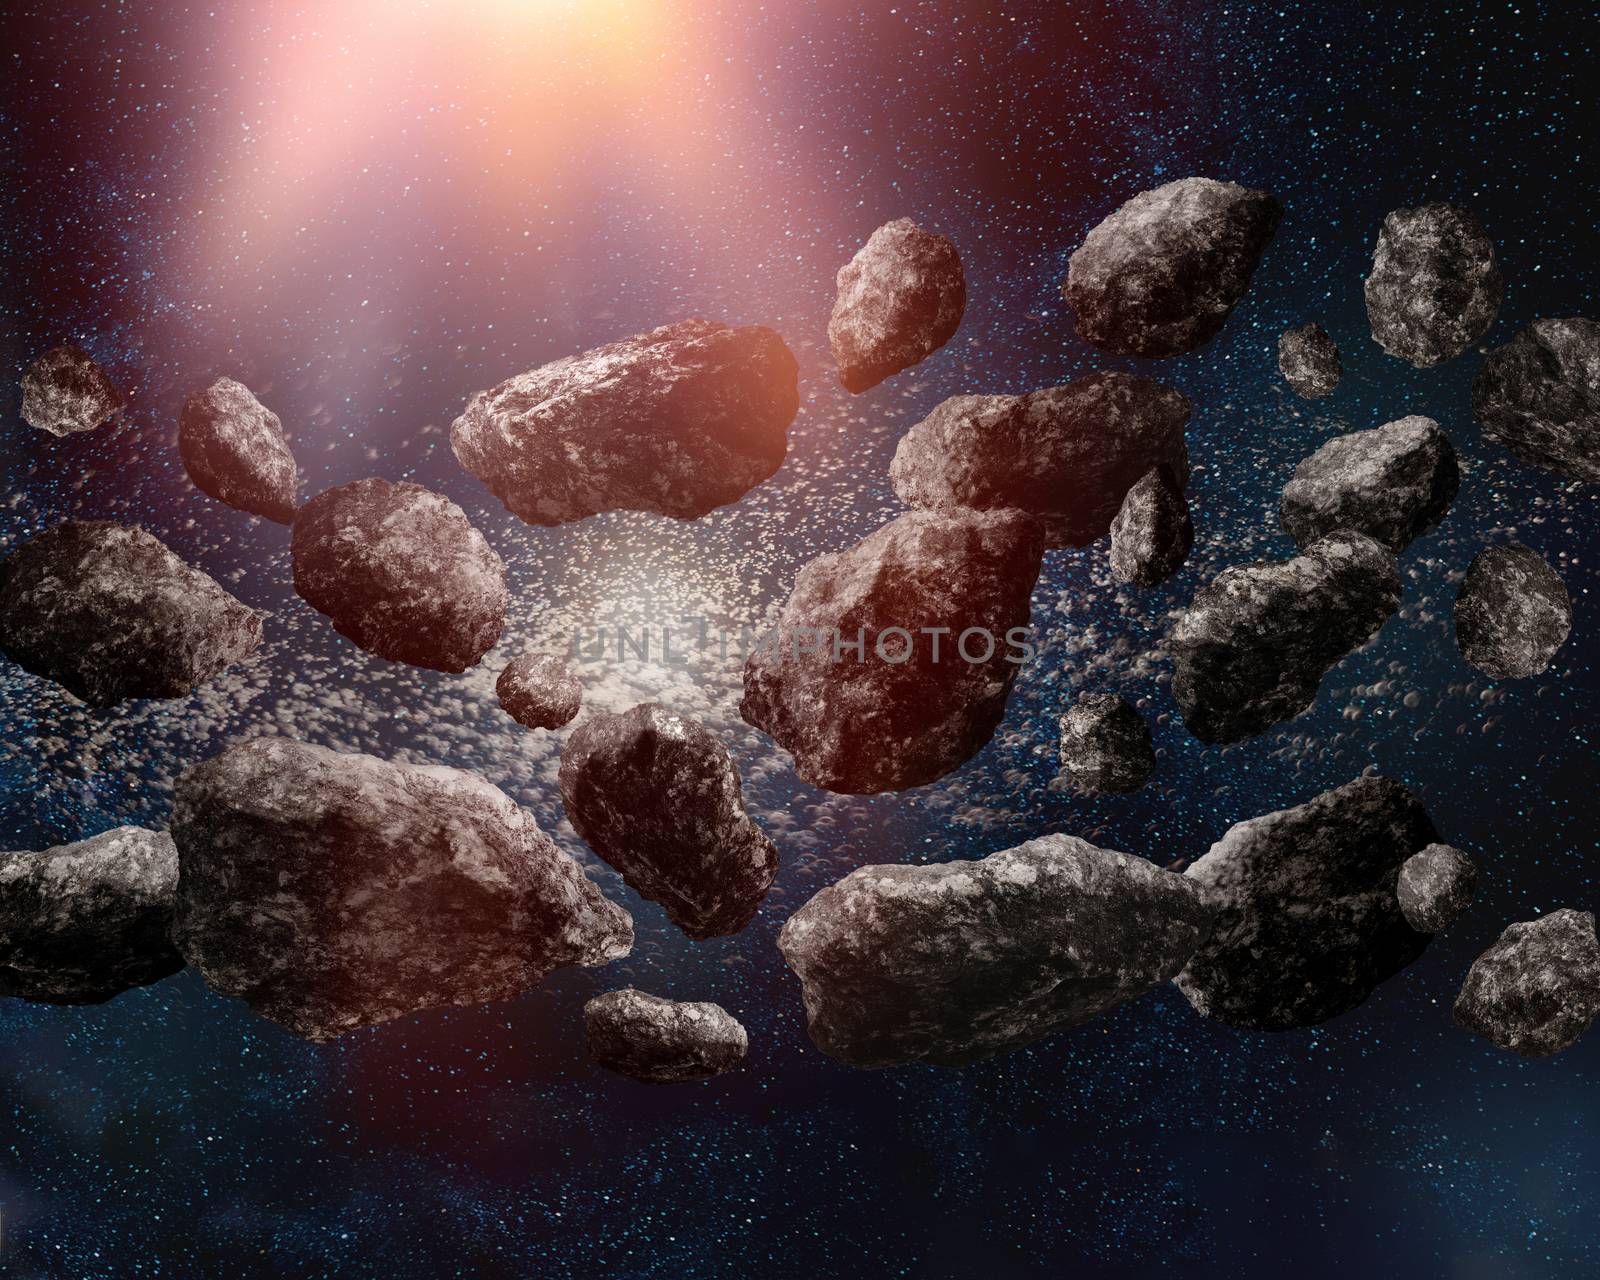 Inside asteroid belt in deep space by anterovium